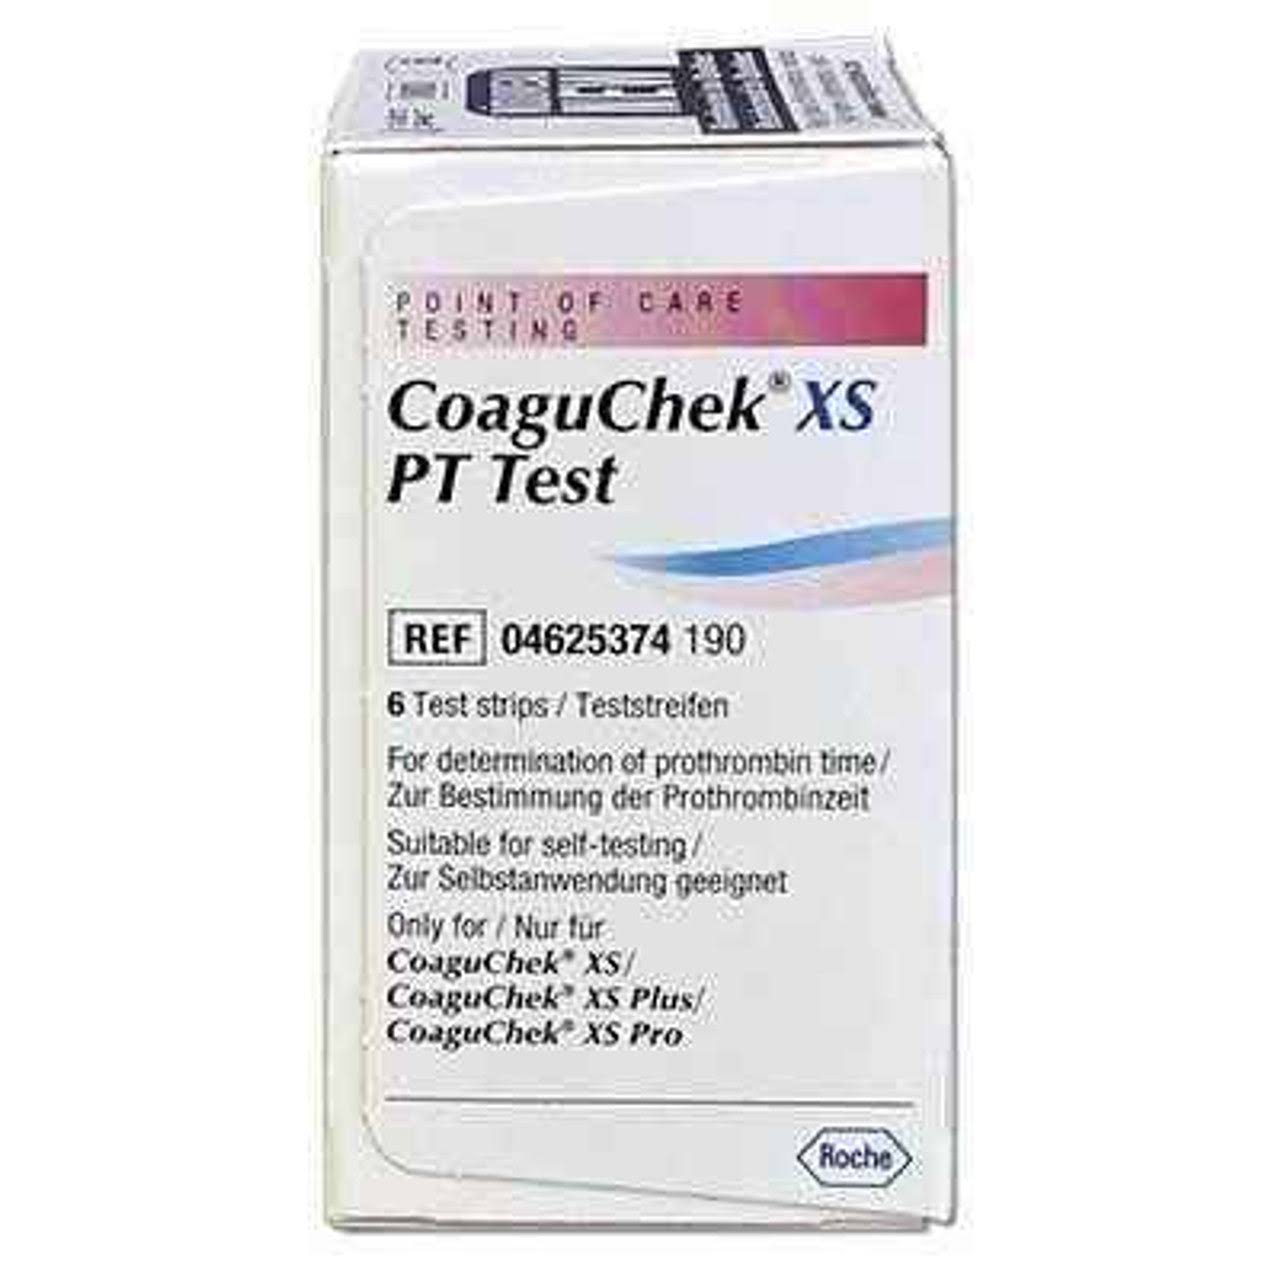 Coaguchek XS PT Test Strips - Pack of 6